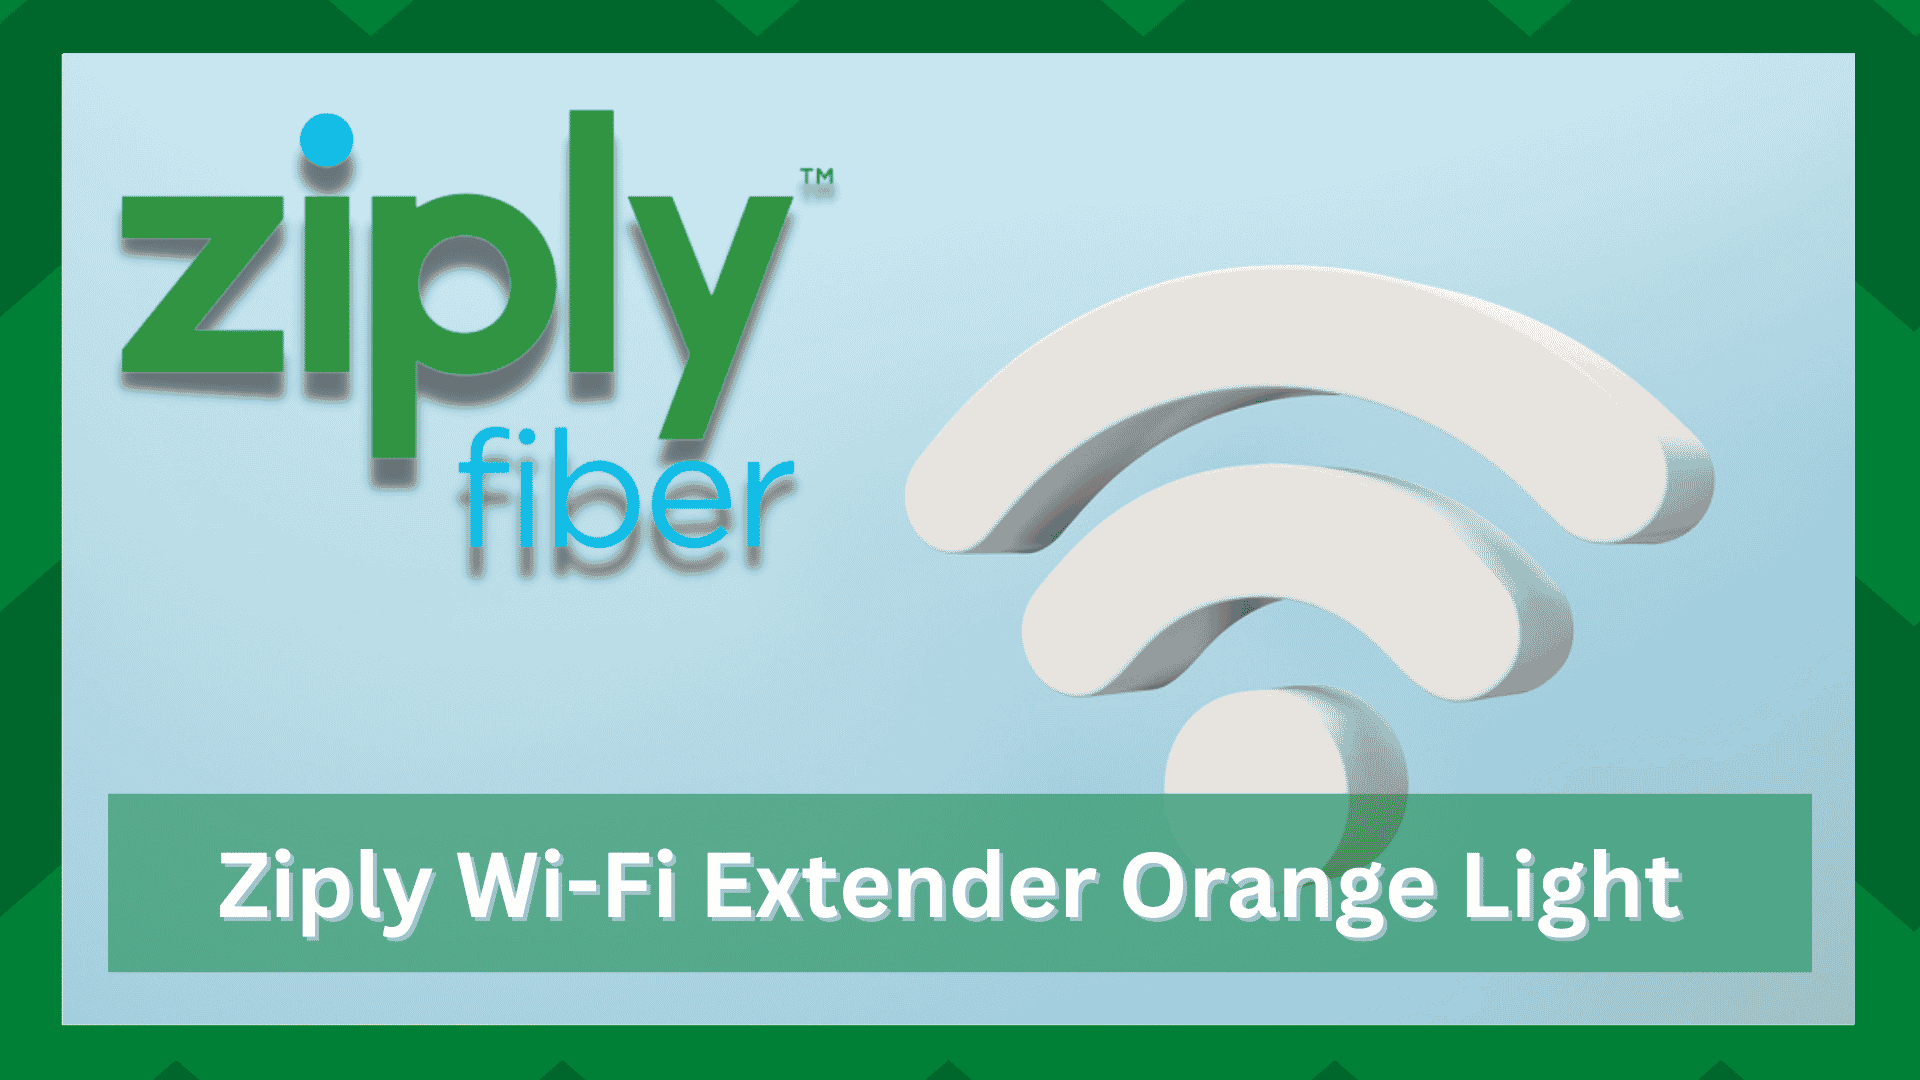 Ziply Wi-Fi Extender Orange Light